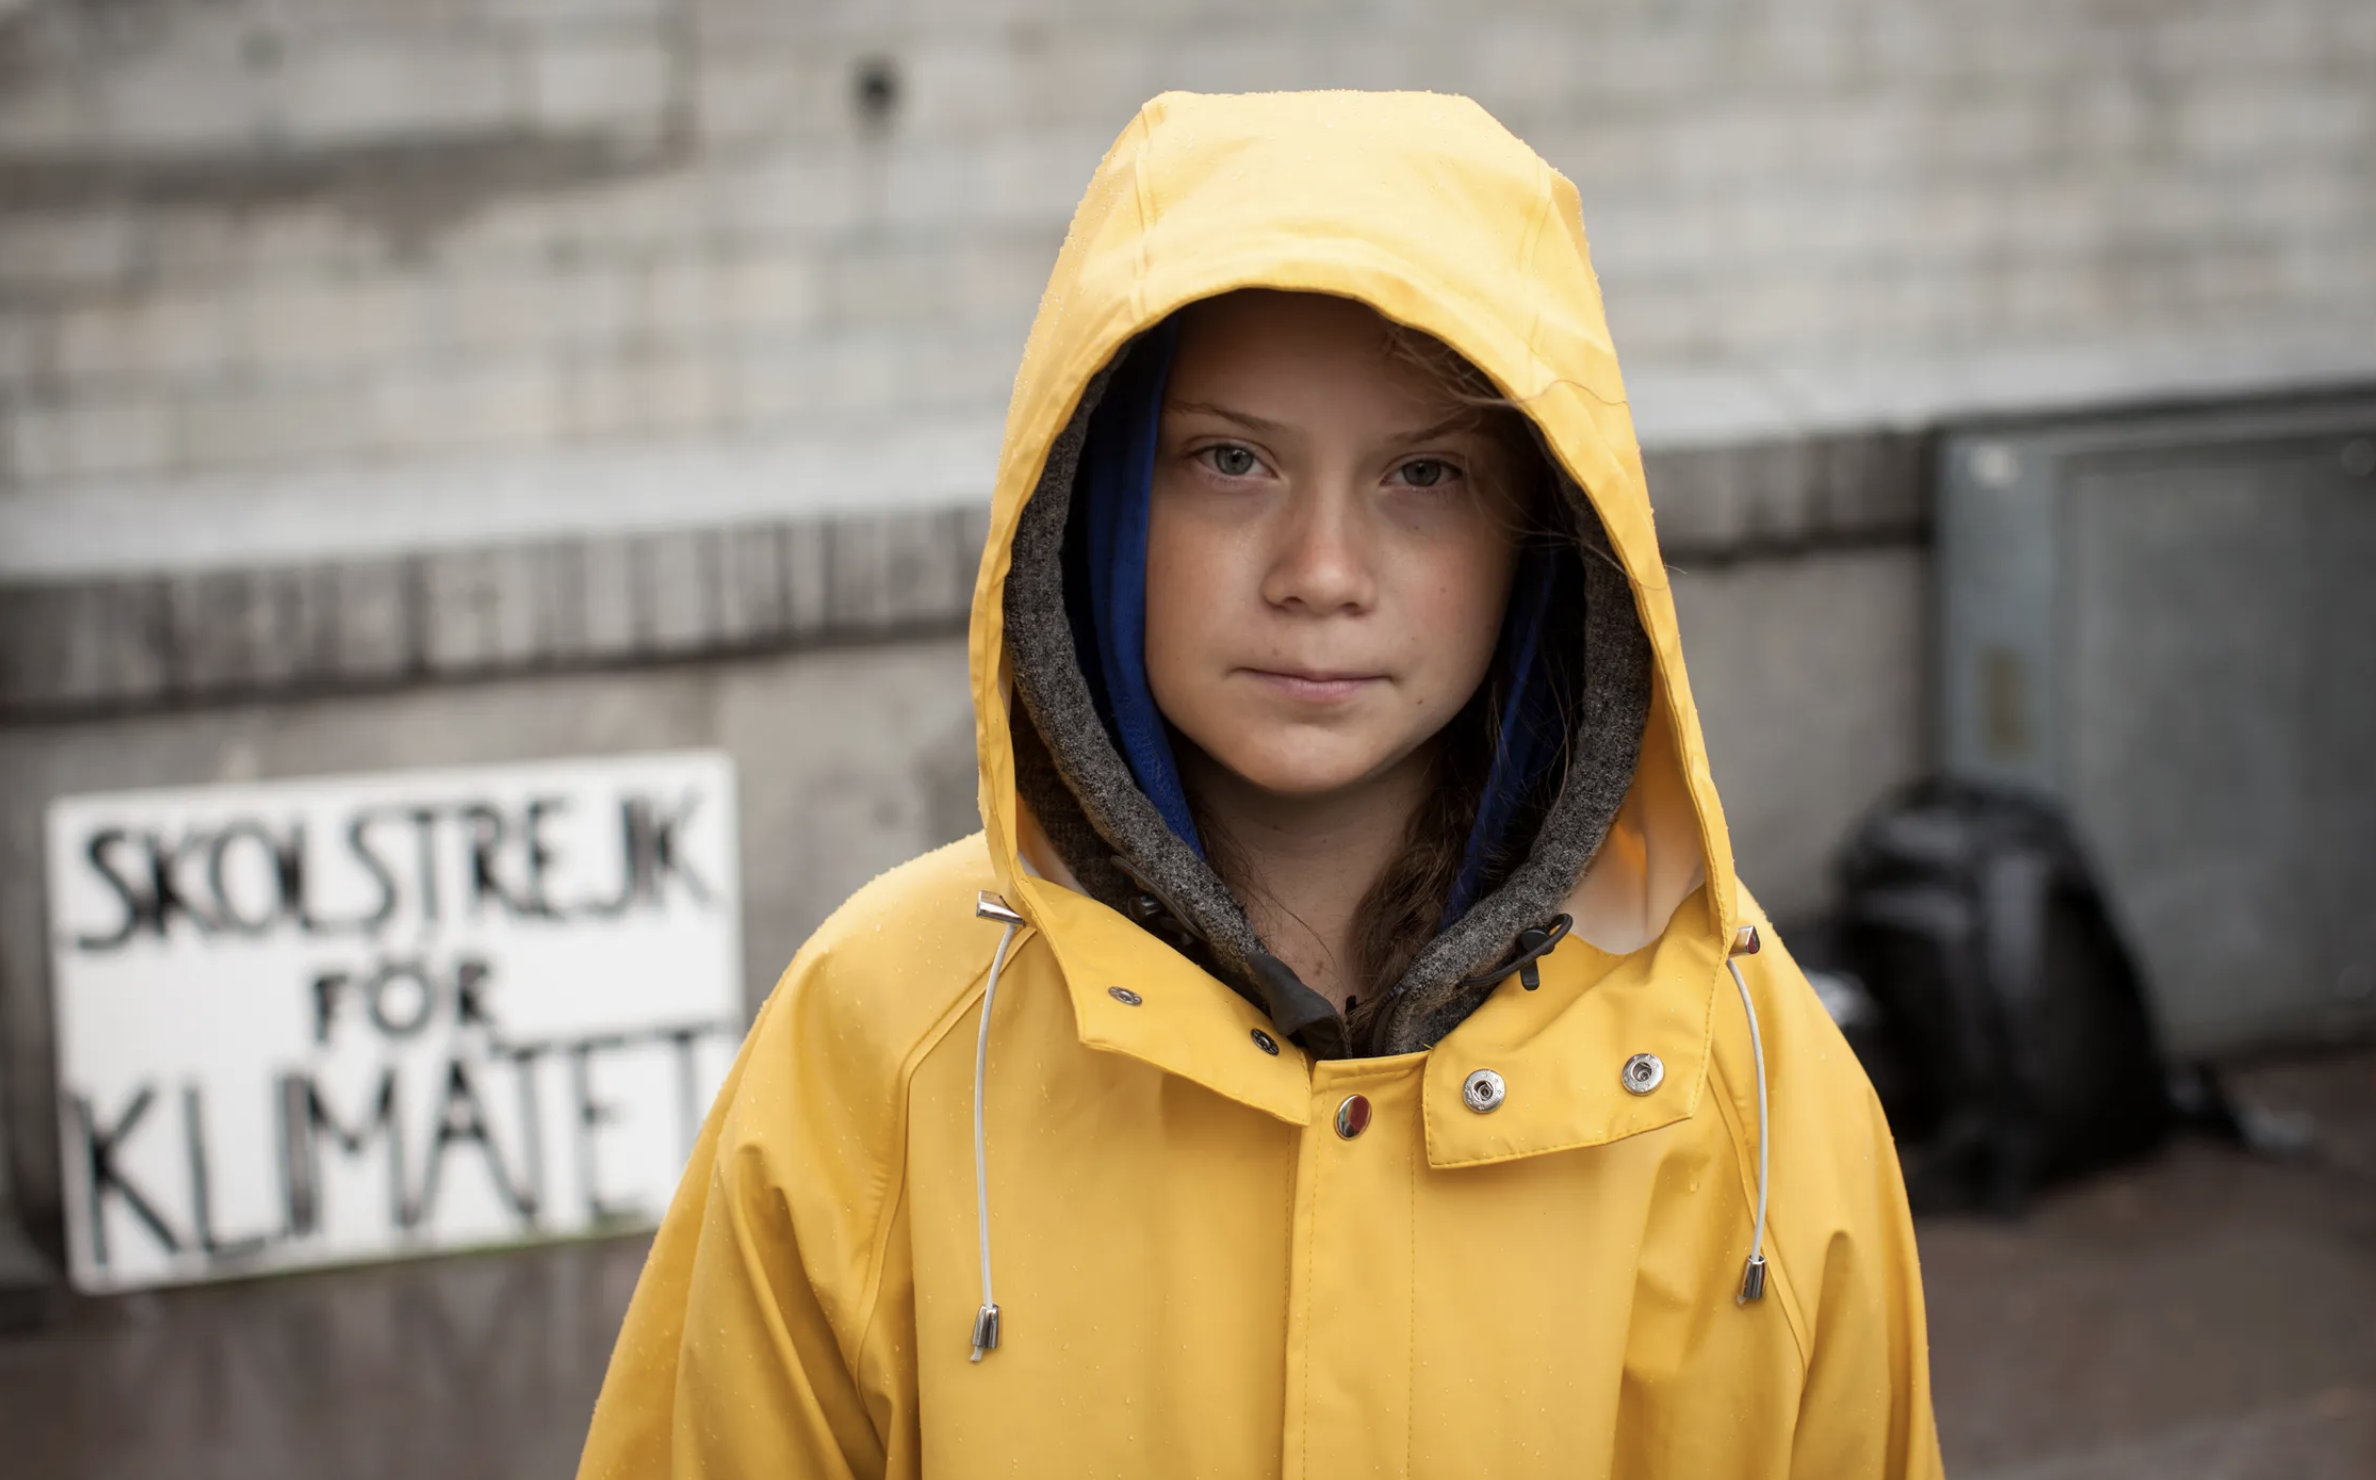 Greta Thunberg wearing a yellow raincoat